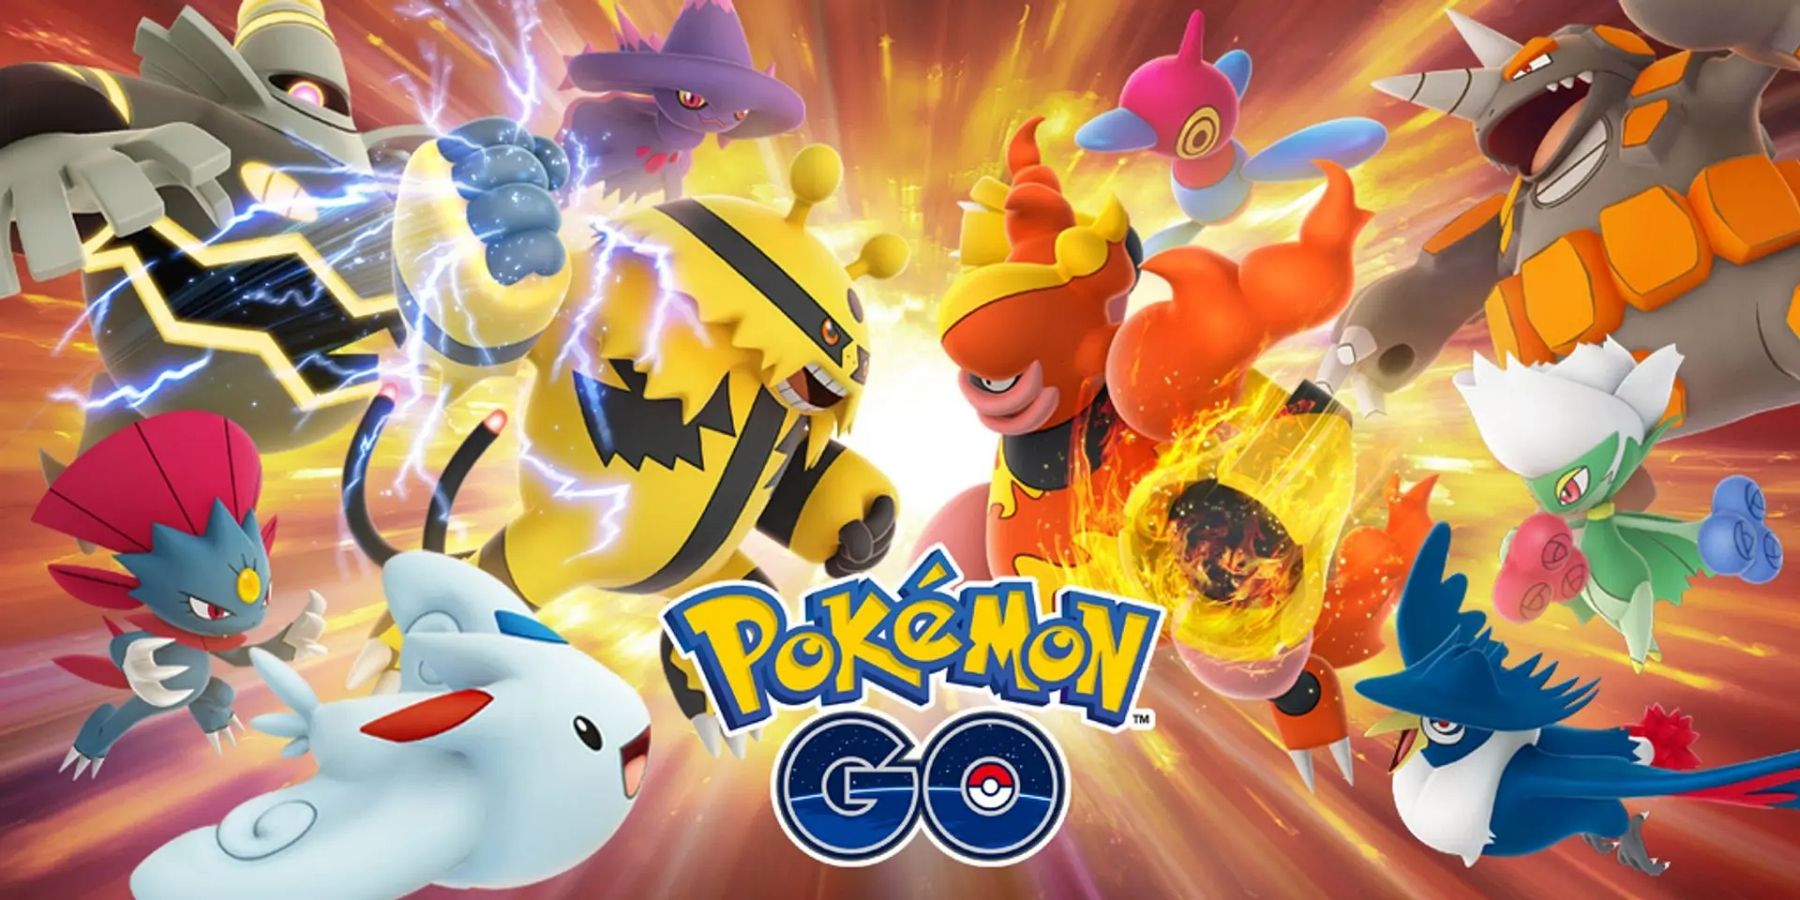 I have ONE CHANCE to catch THIS Legendary Pokémon! #pokemongo